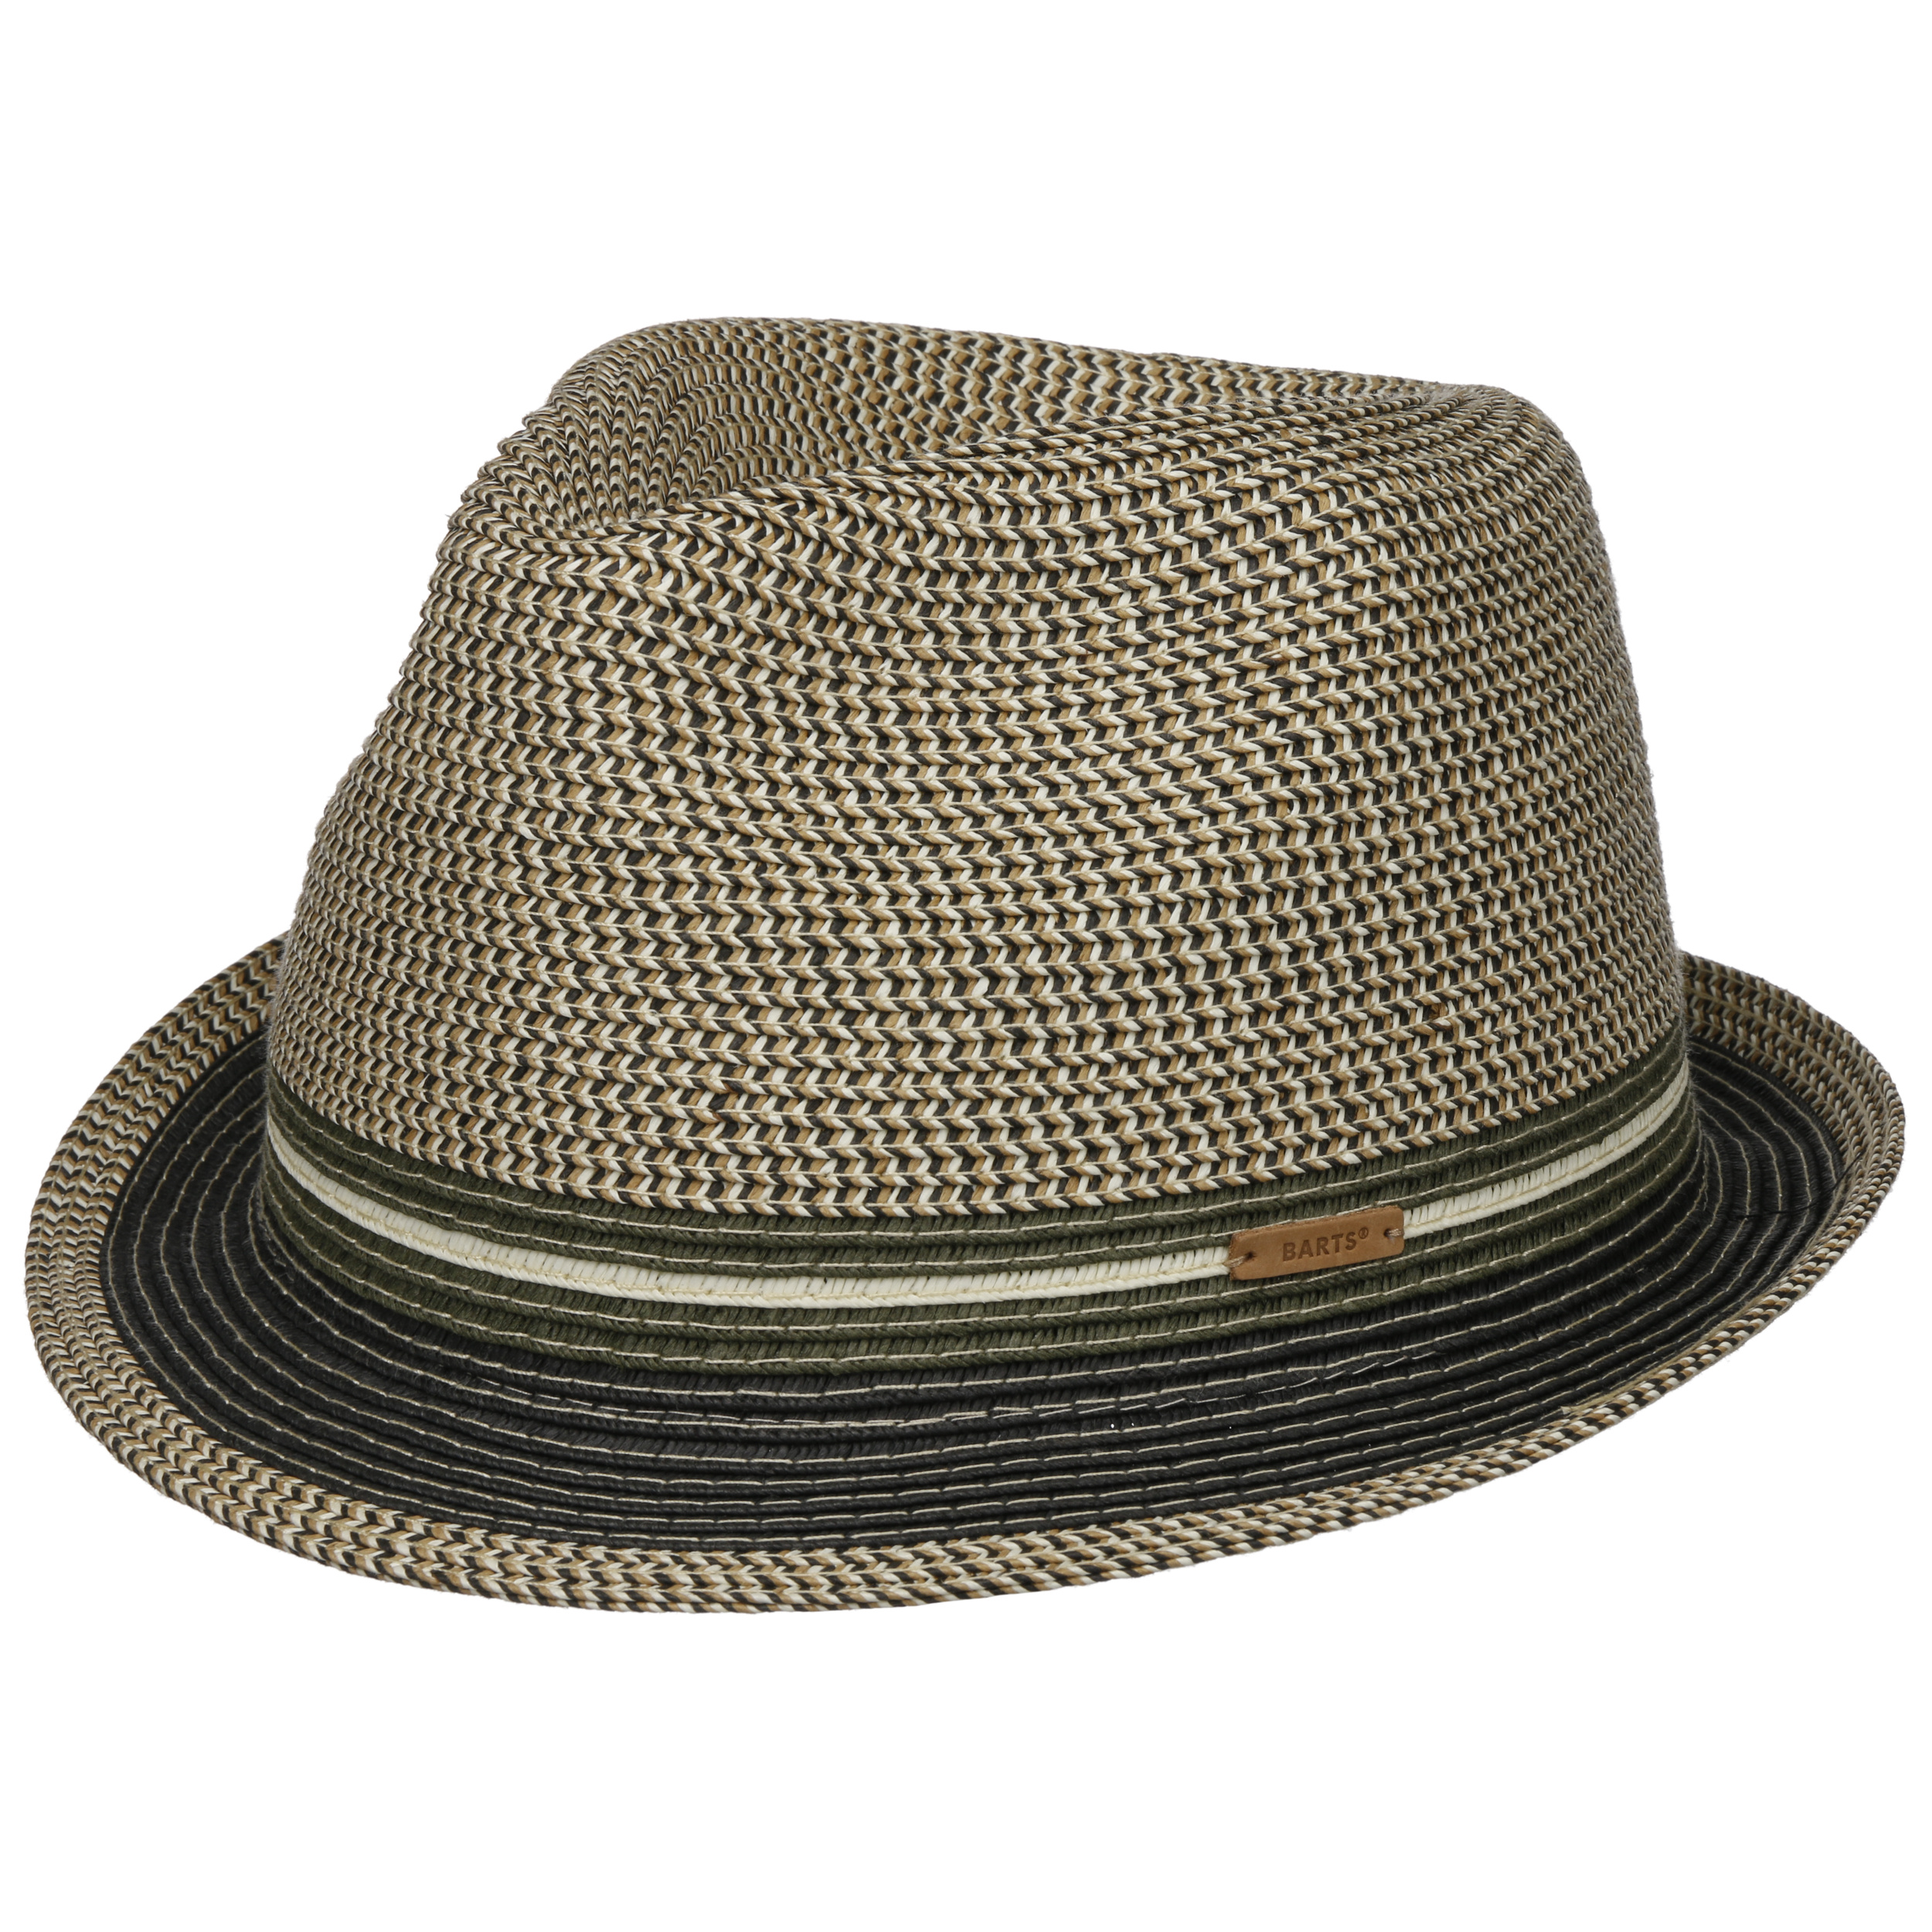 Fluoriet Trilby Hat Barts - € 37,95 by